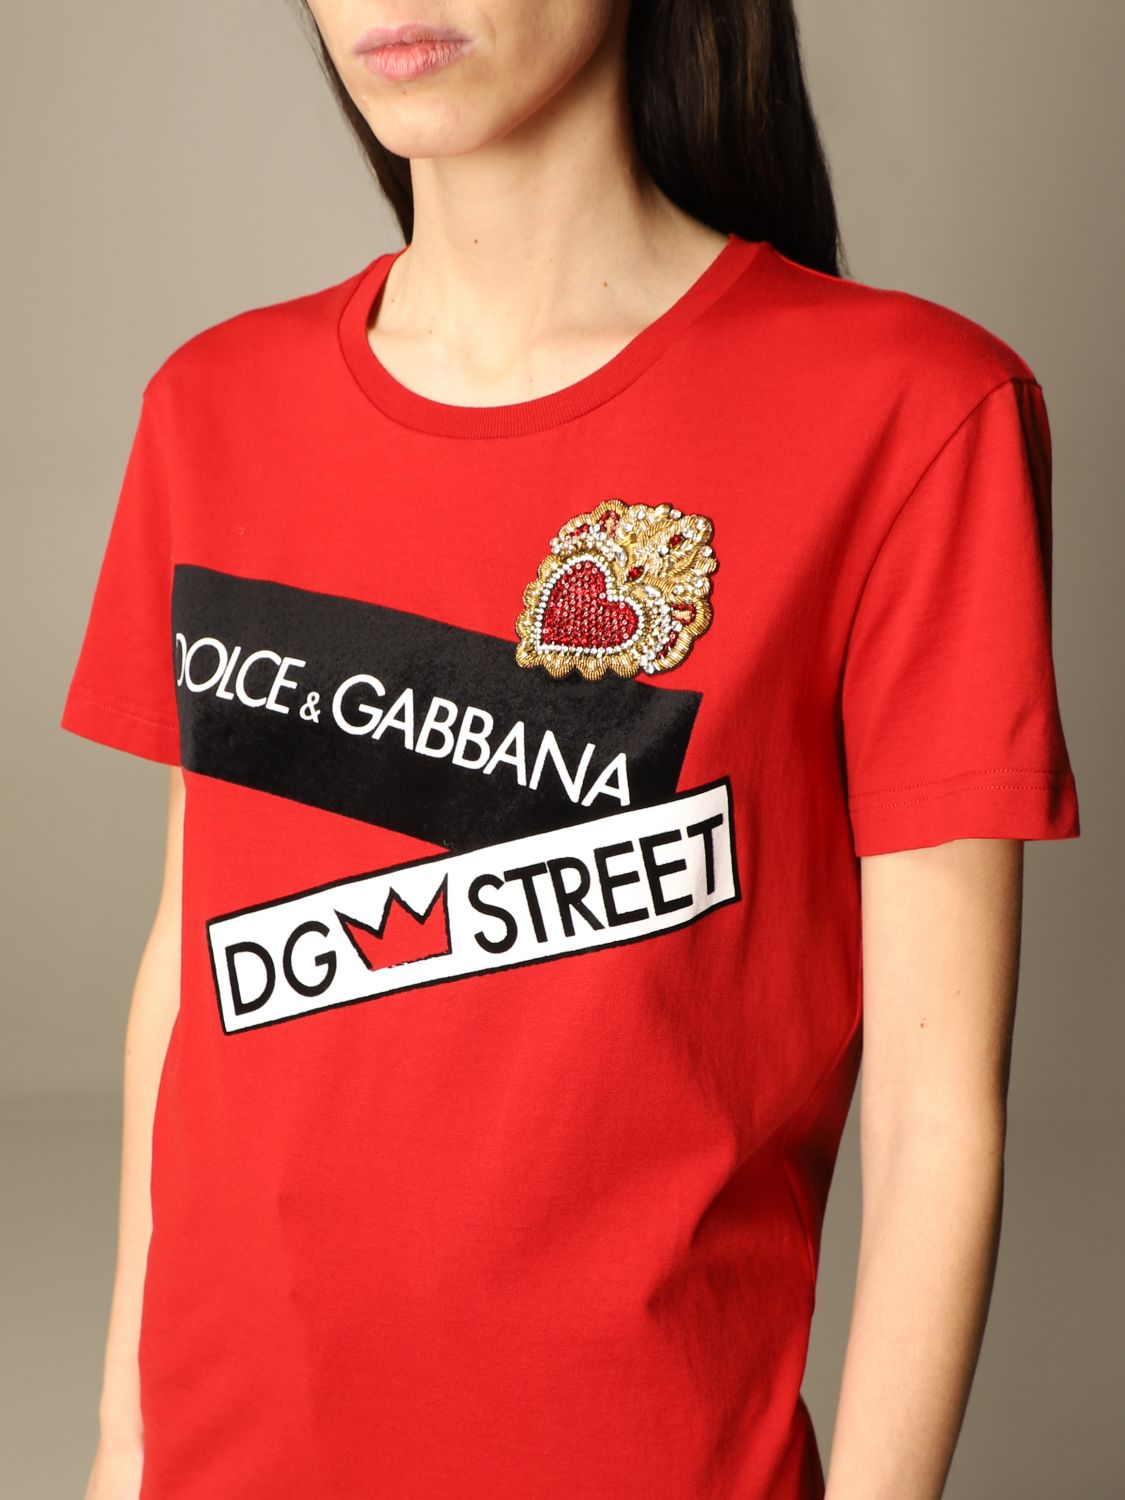 DOLCE & GABBANA: cotton T-shirt with DG Street print | T-Shirt Dolce